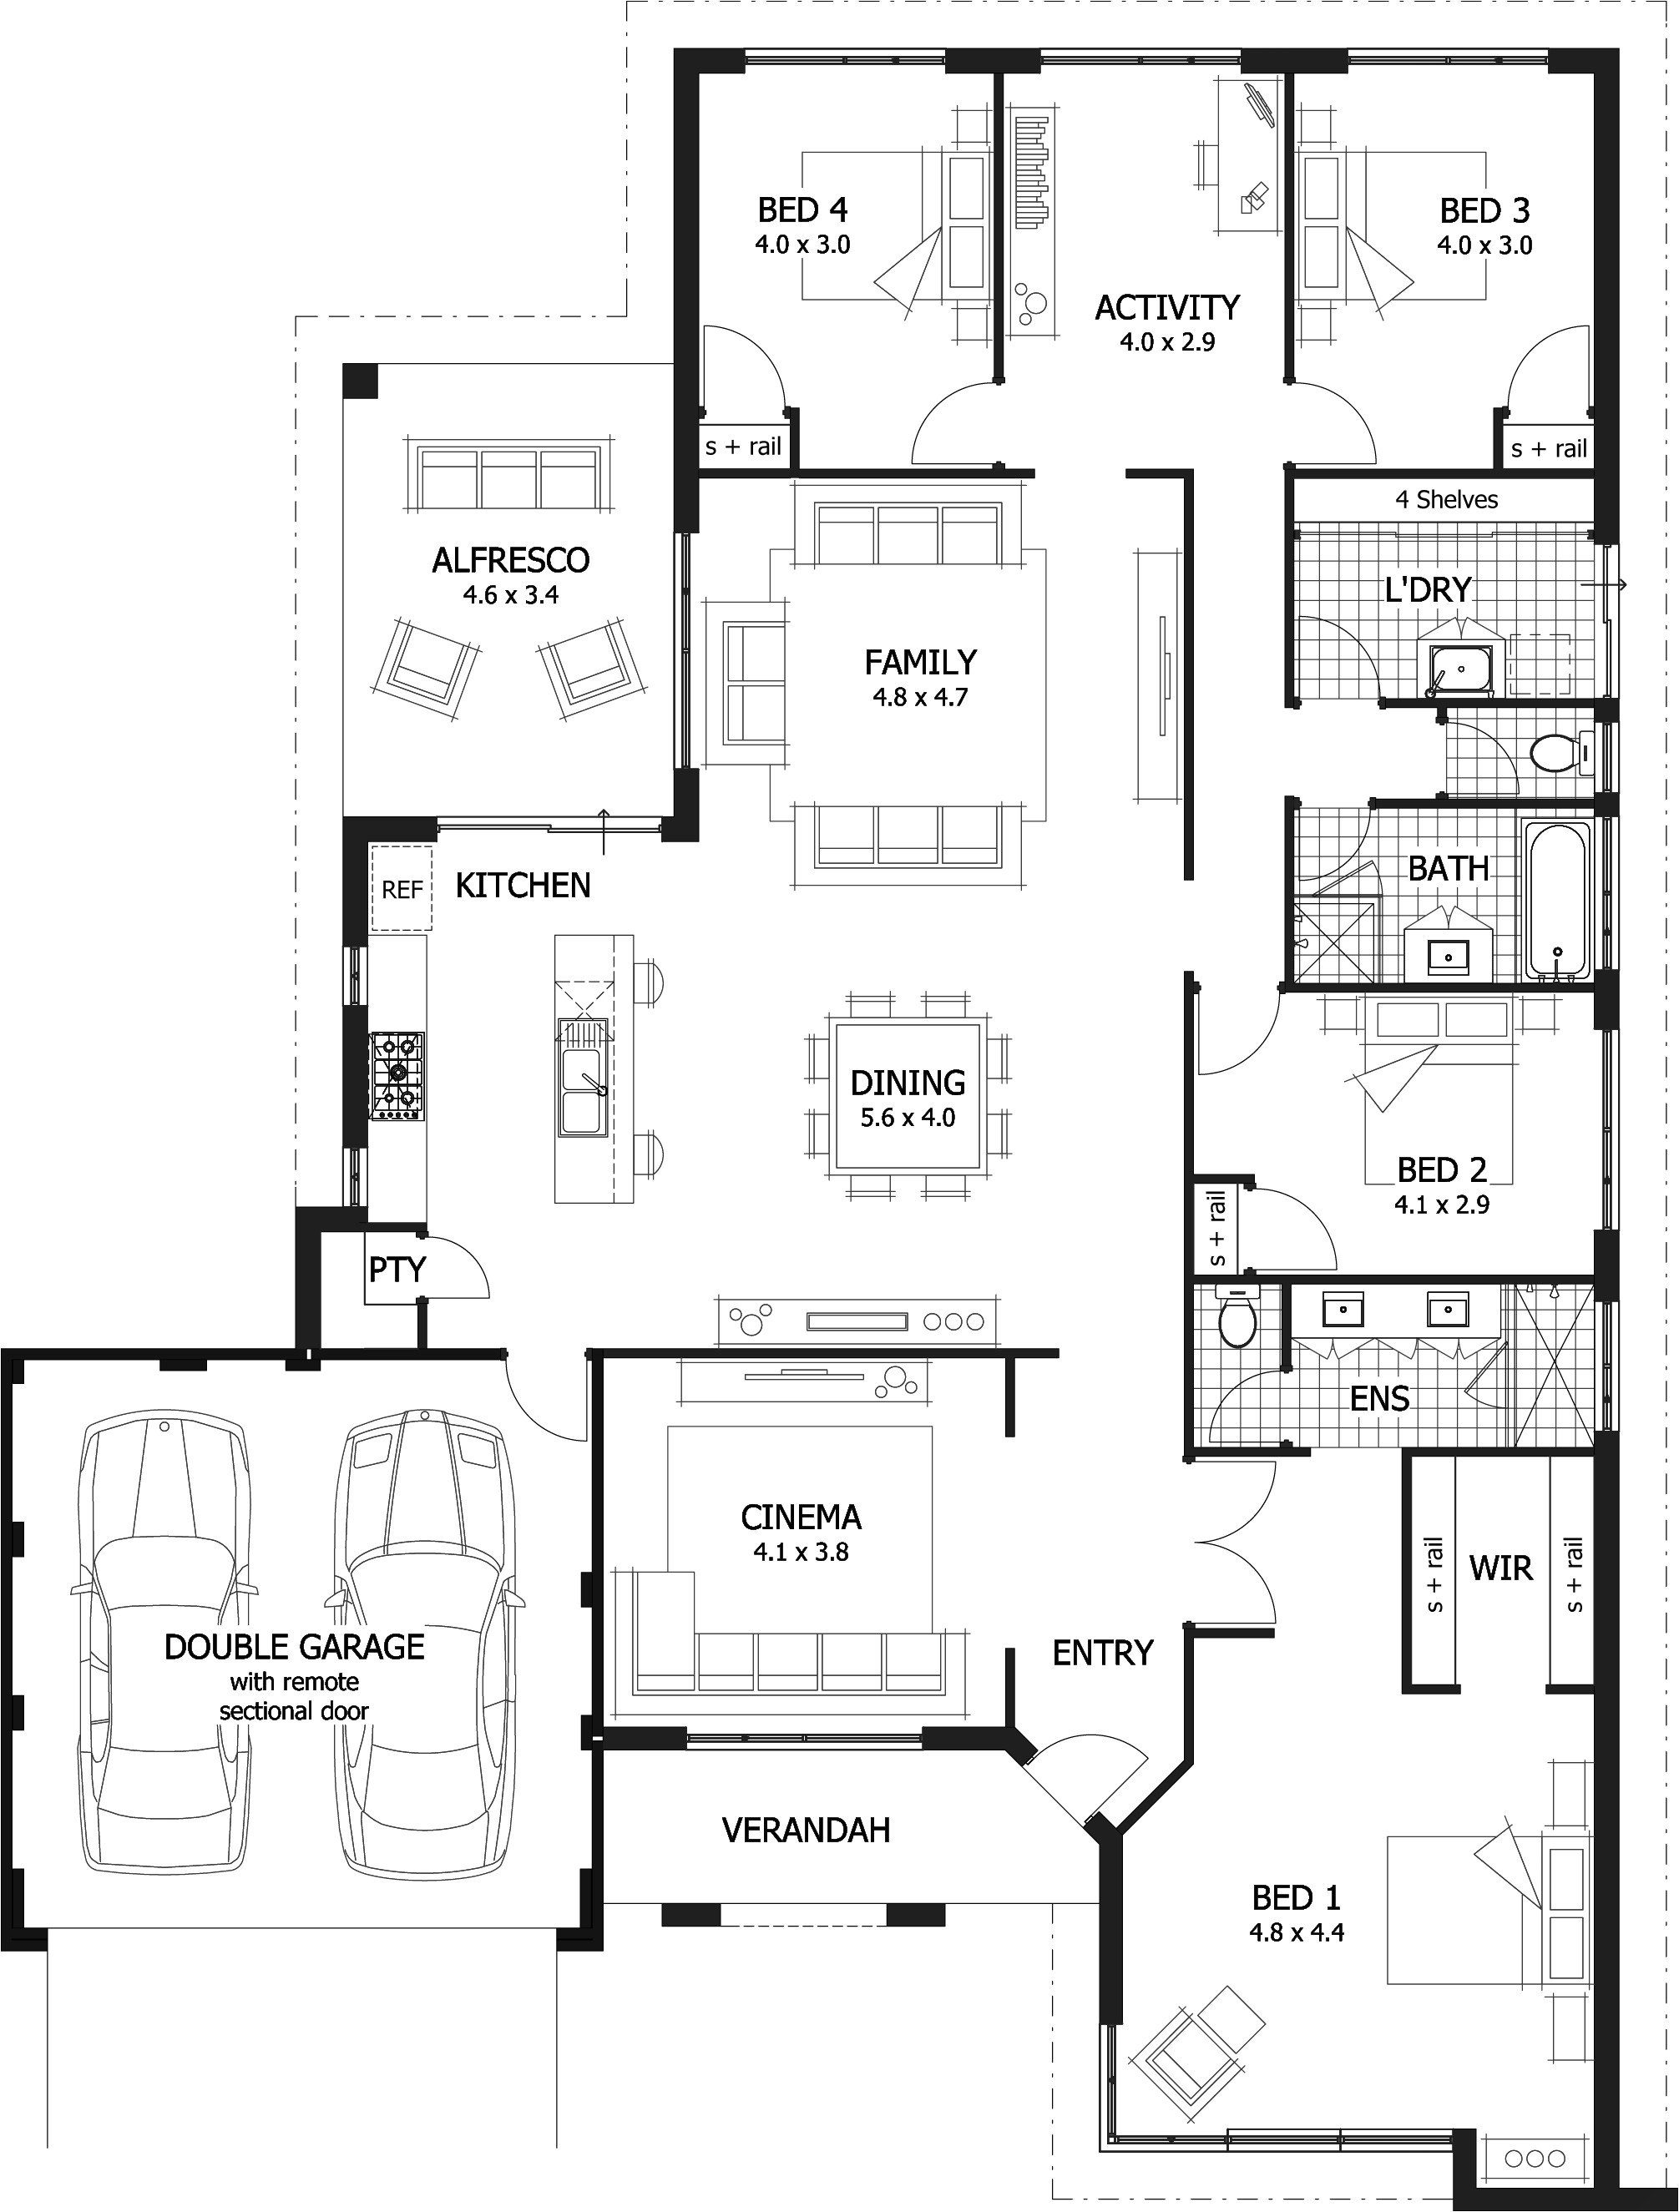 4 bedroom home designs plans